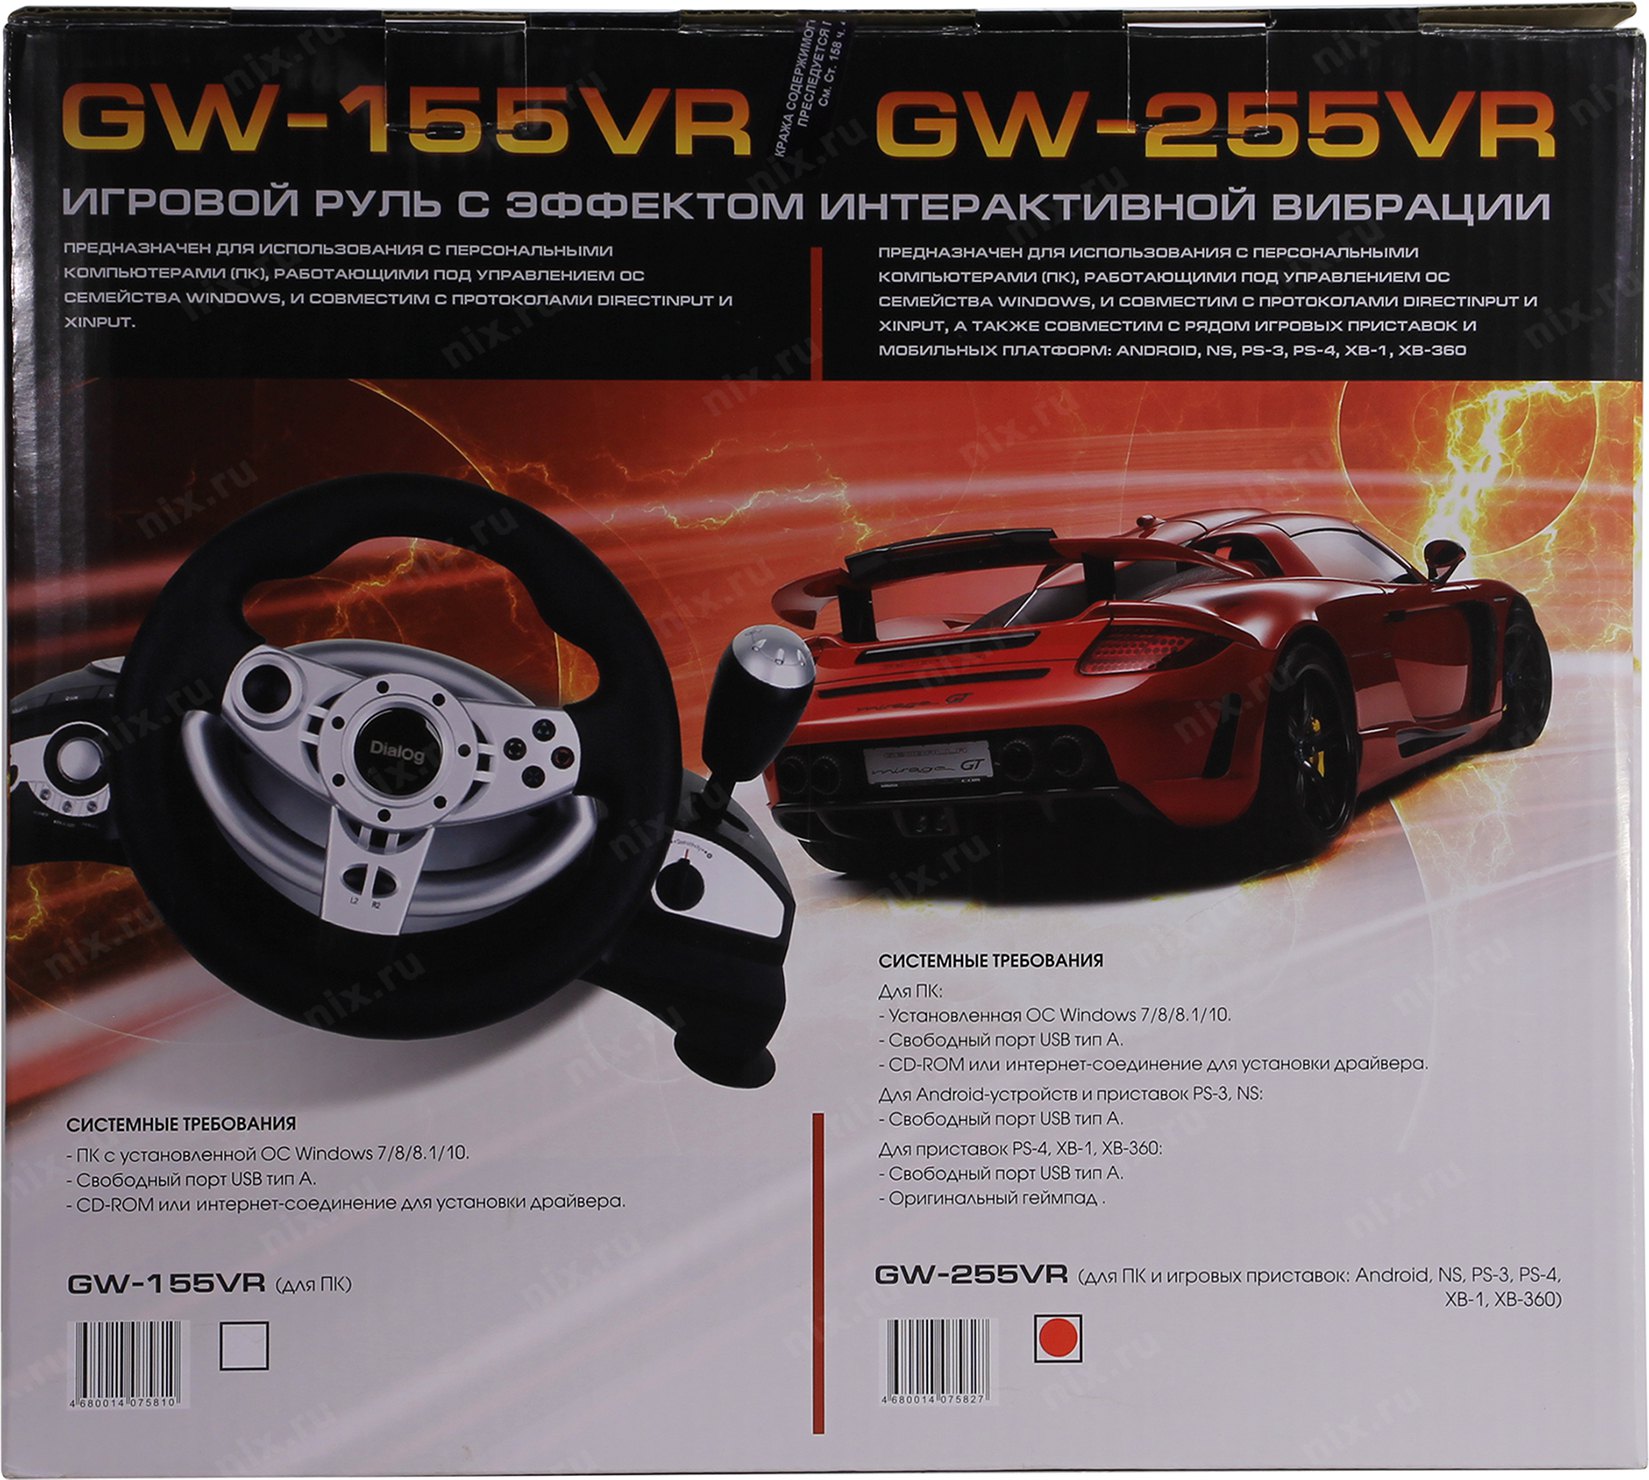 Dialog 155vr. Руль dialog GW 155 VR Cyber Pilot. Руль dialog Cyberpilot GW-155vr. Игровой руль dialog GW 255vr. Руль диалог GW 155 VR.